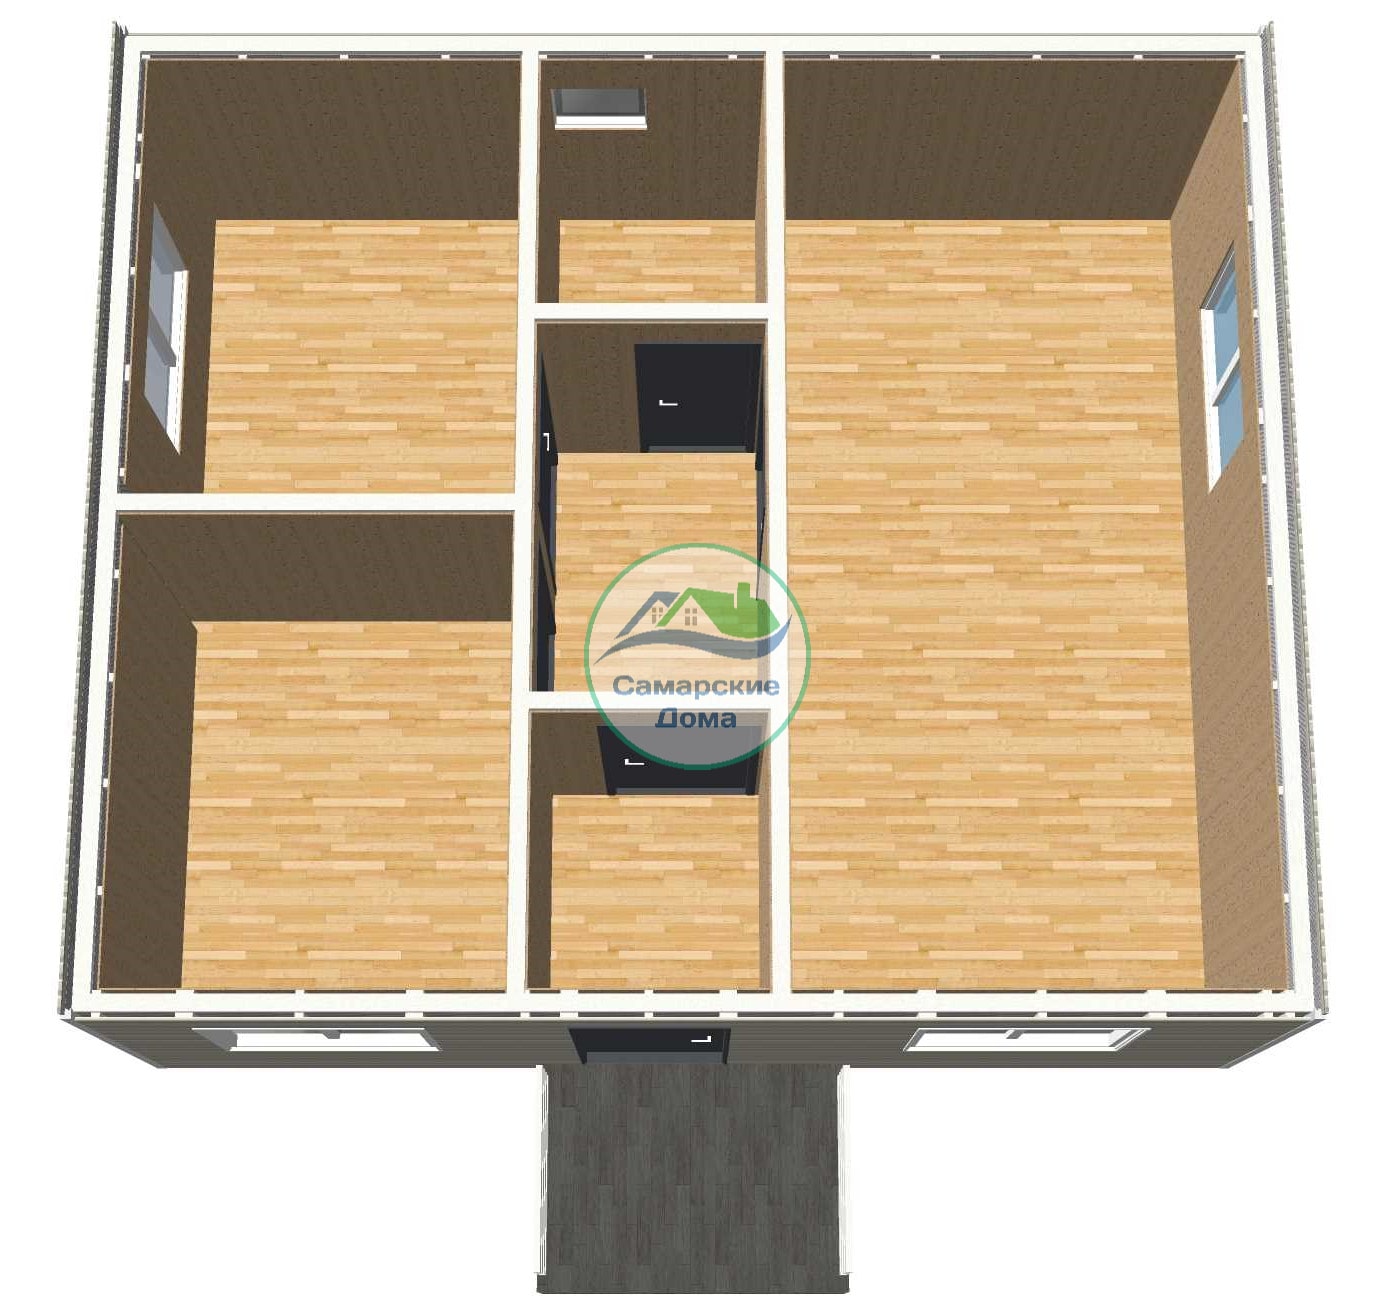 Планировка дома СД-451д 3D